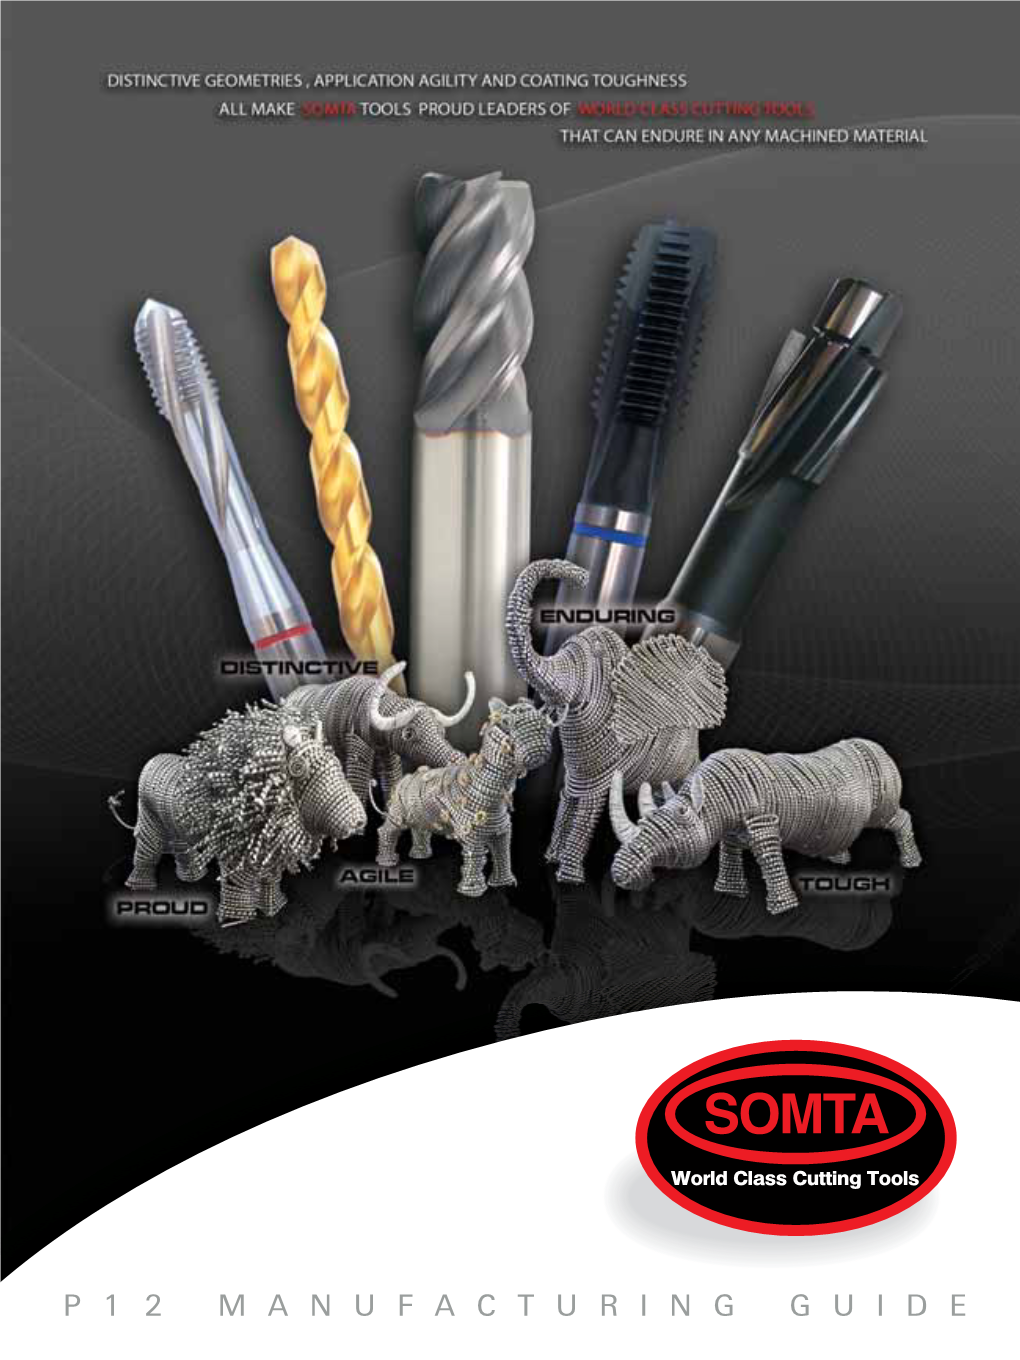 Somta Manufacturing Guide